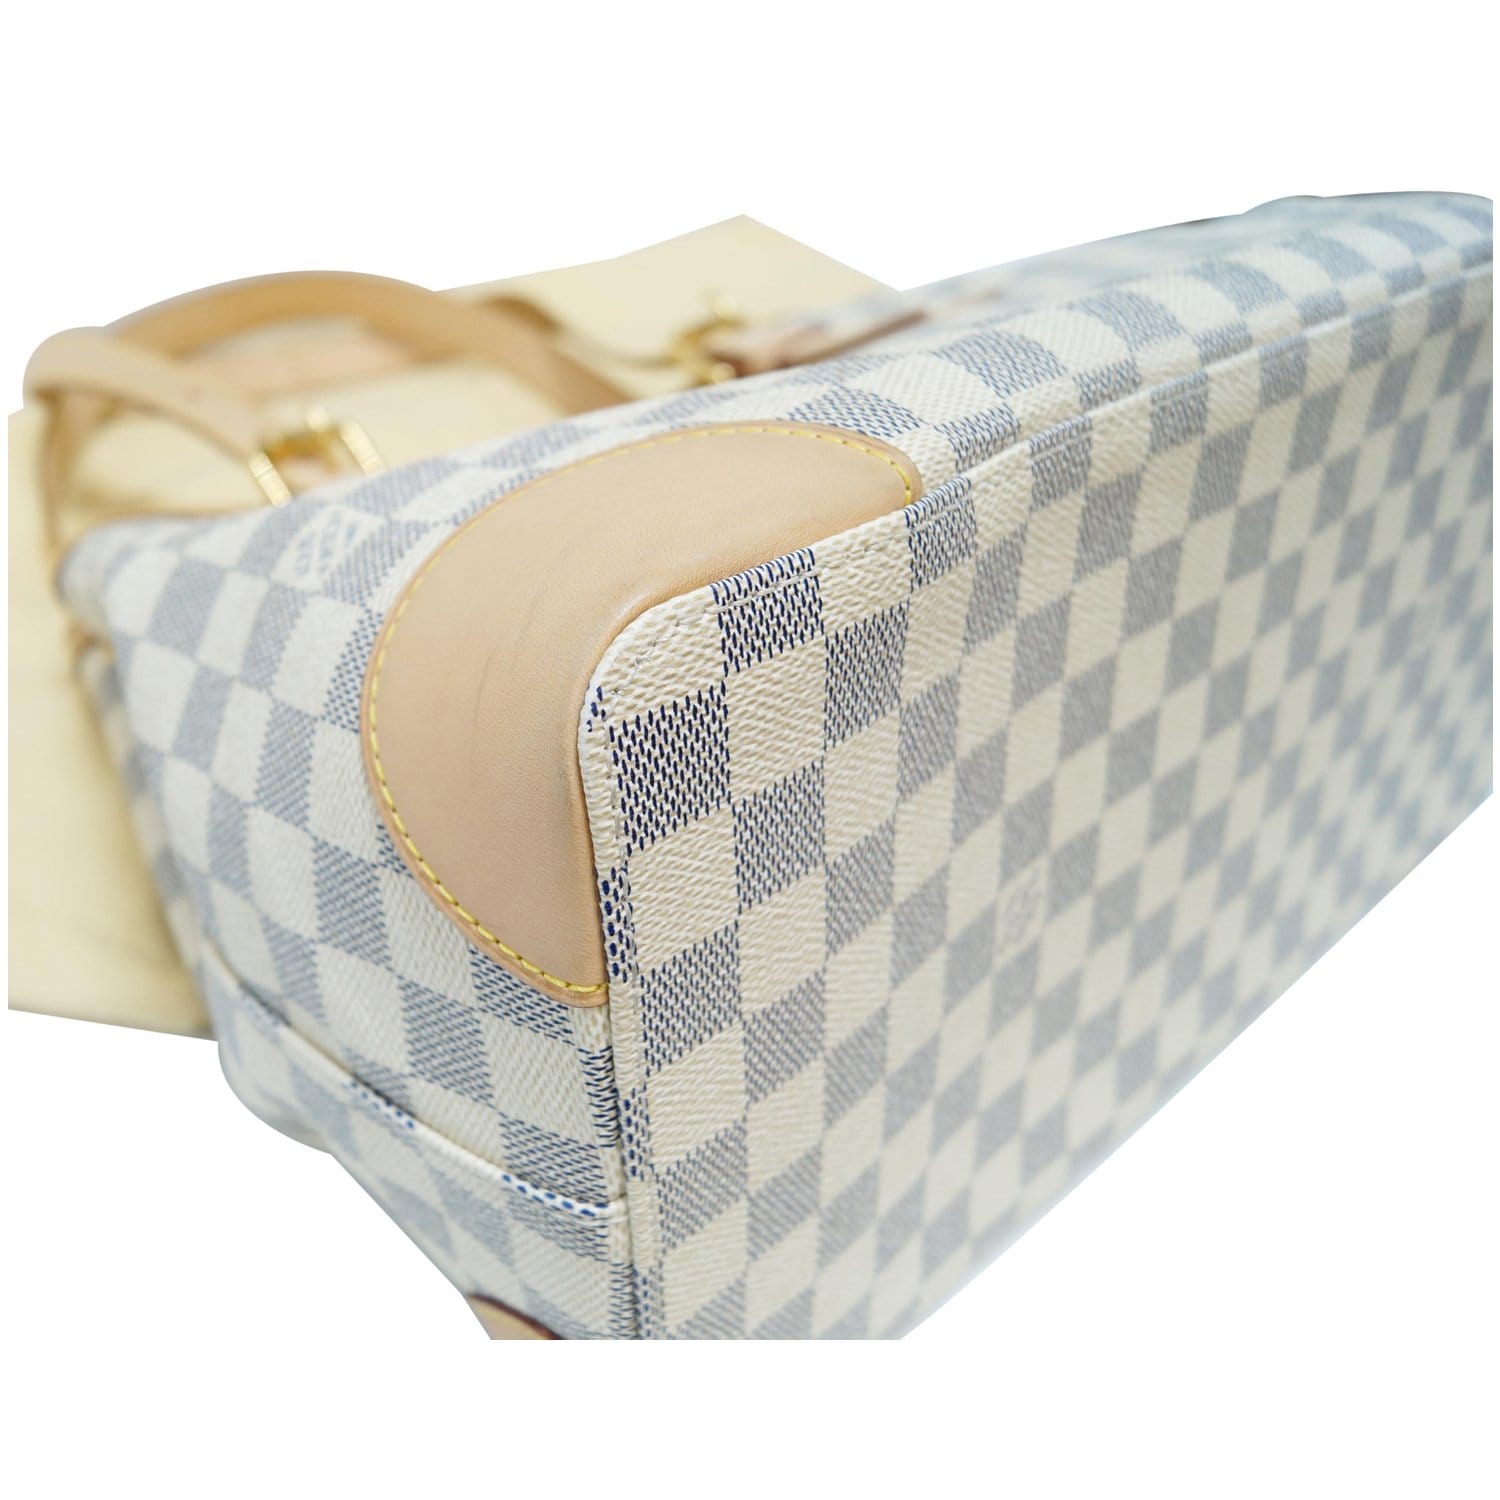 Delightful MM Damier Azur – Keeks Designer Handbags